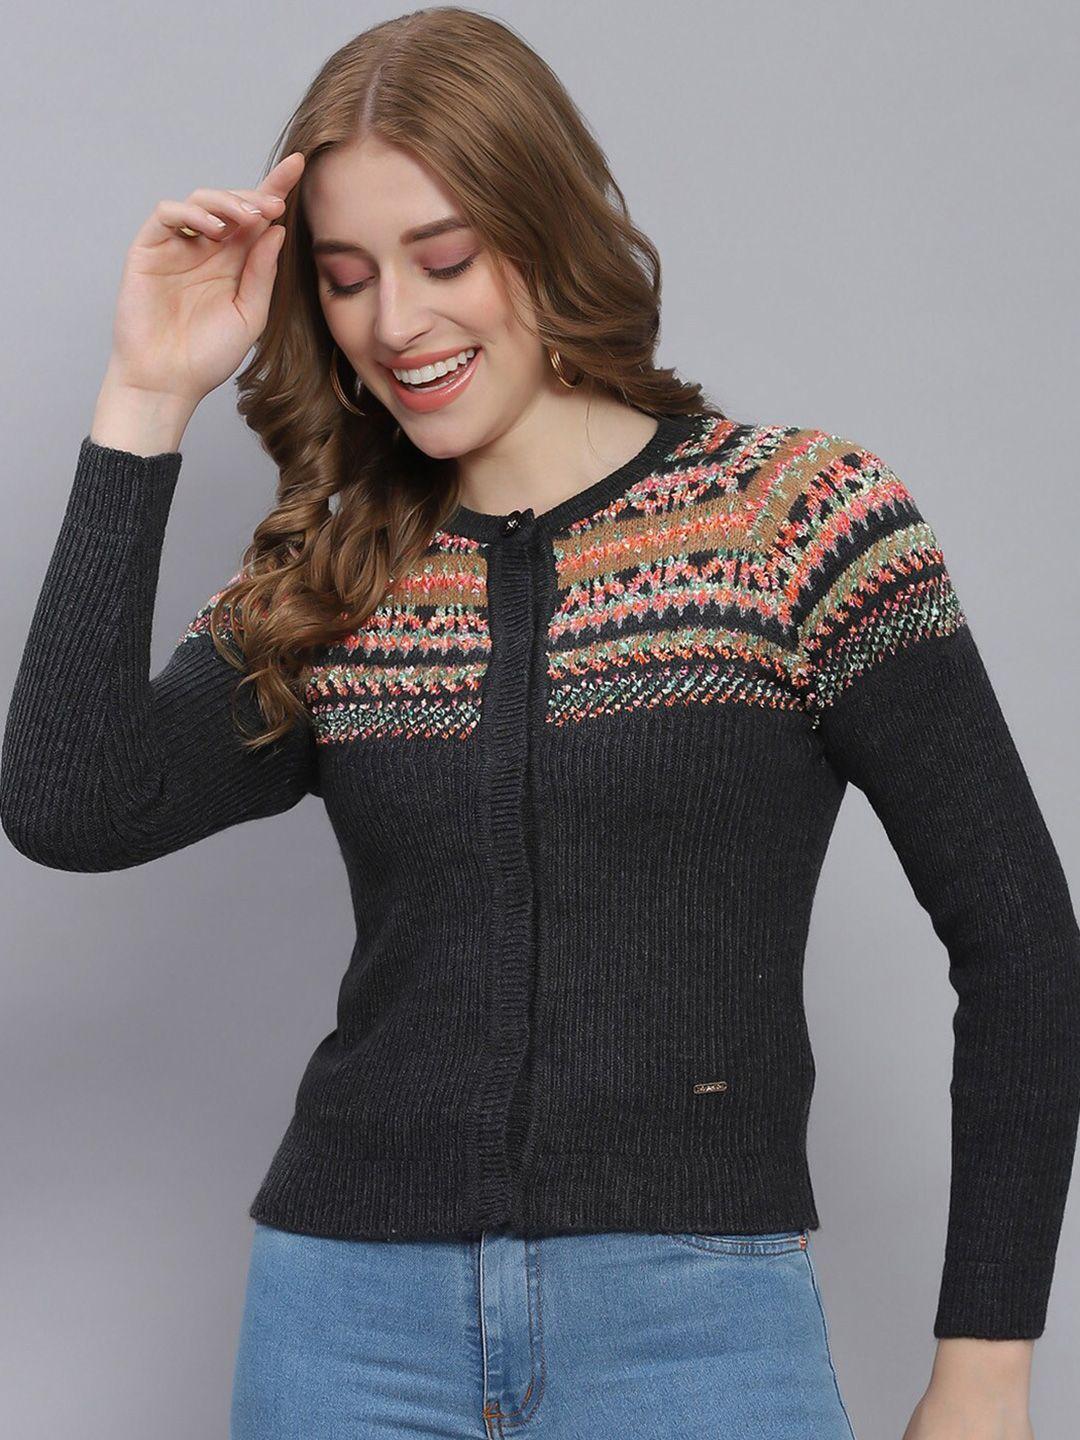 monte carlo self design woollen cardigan sweater